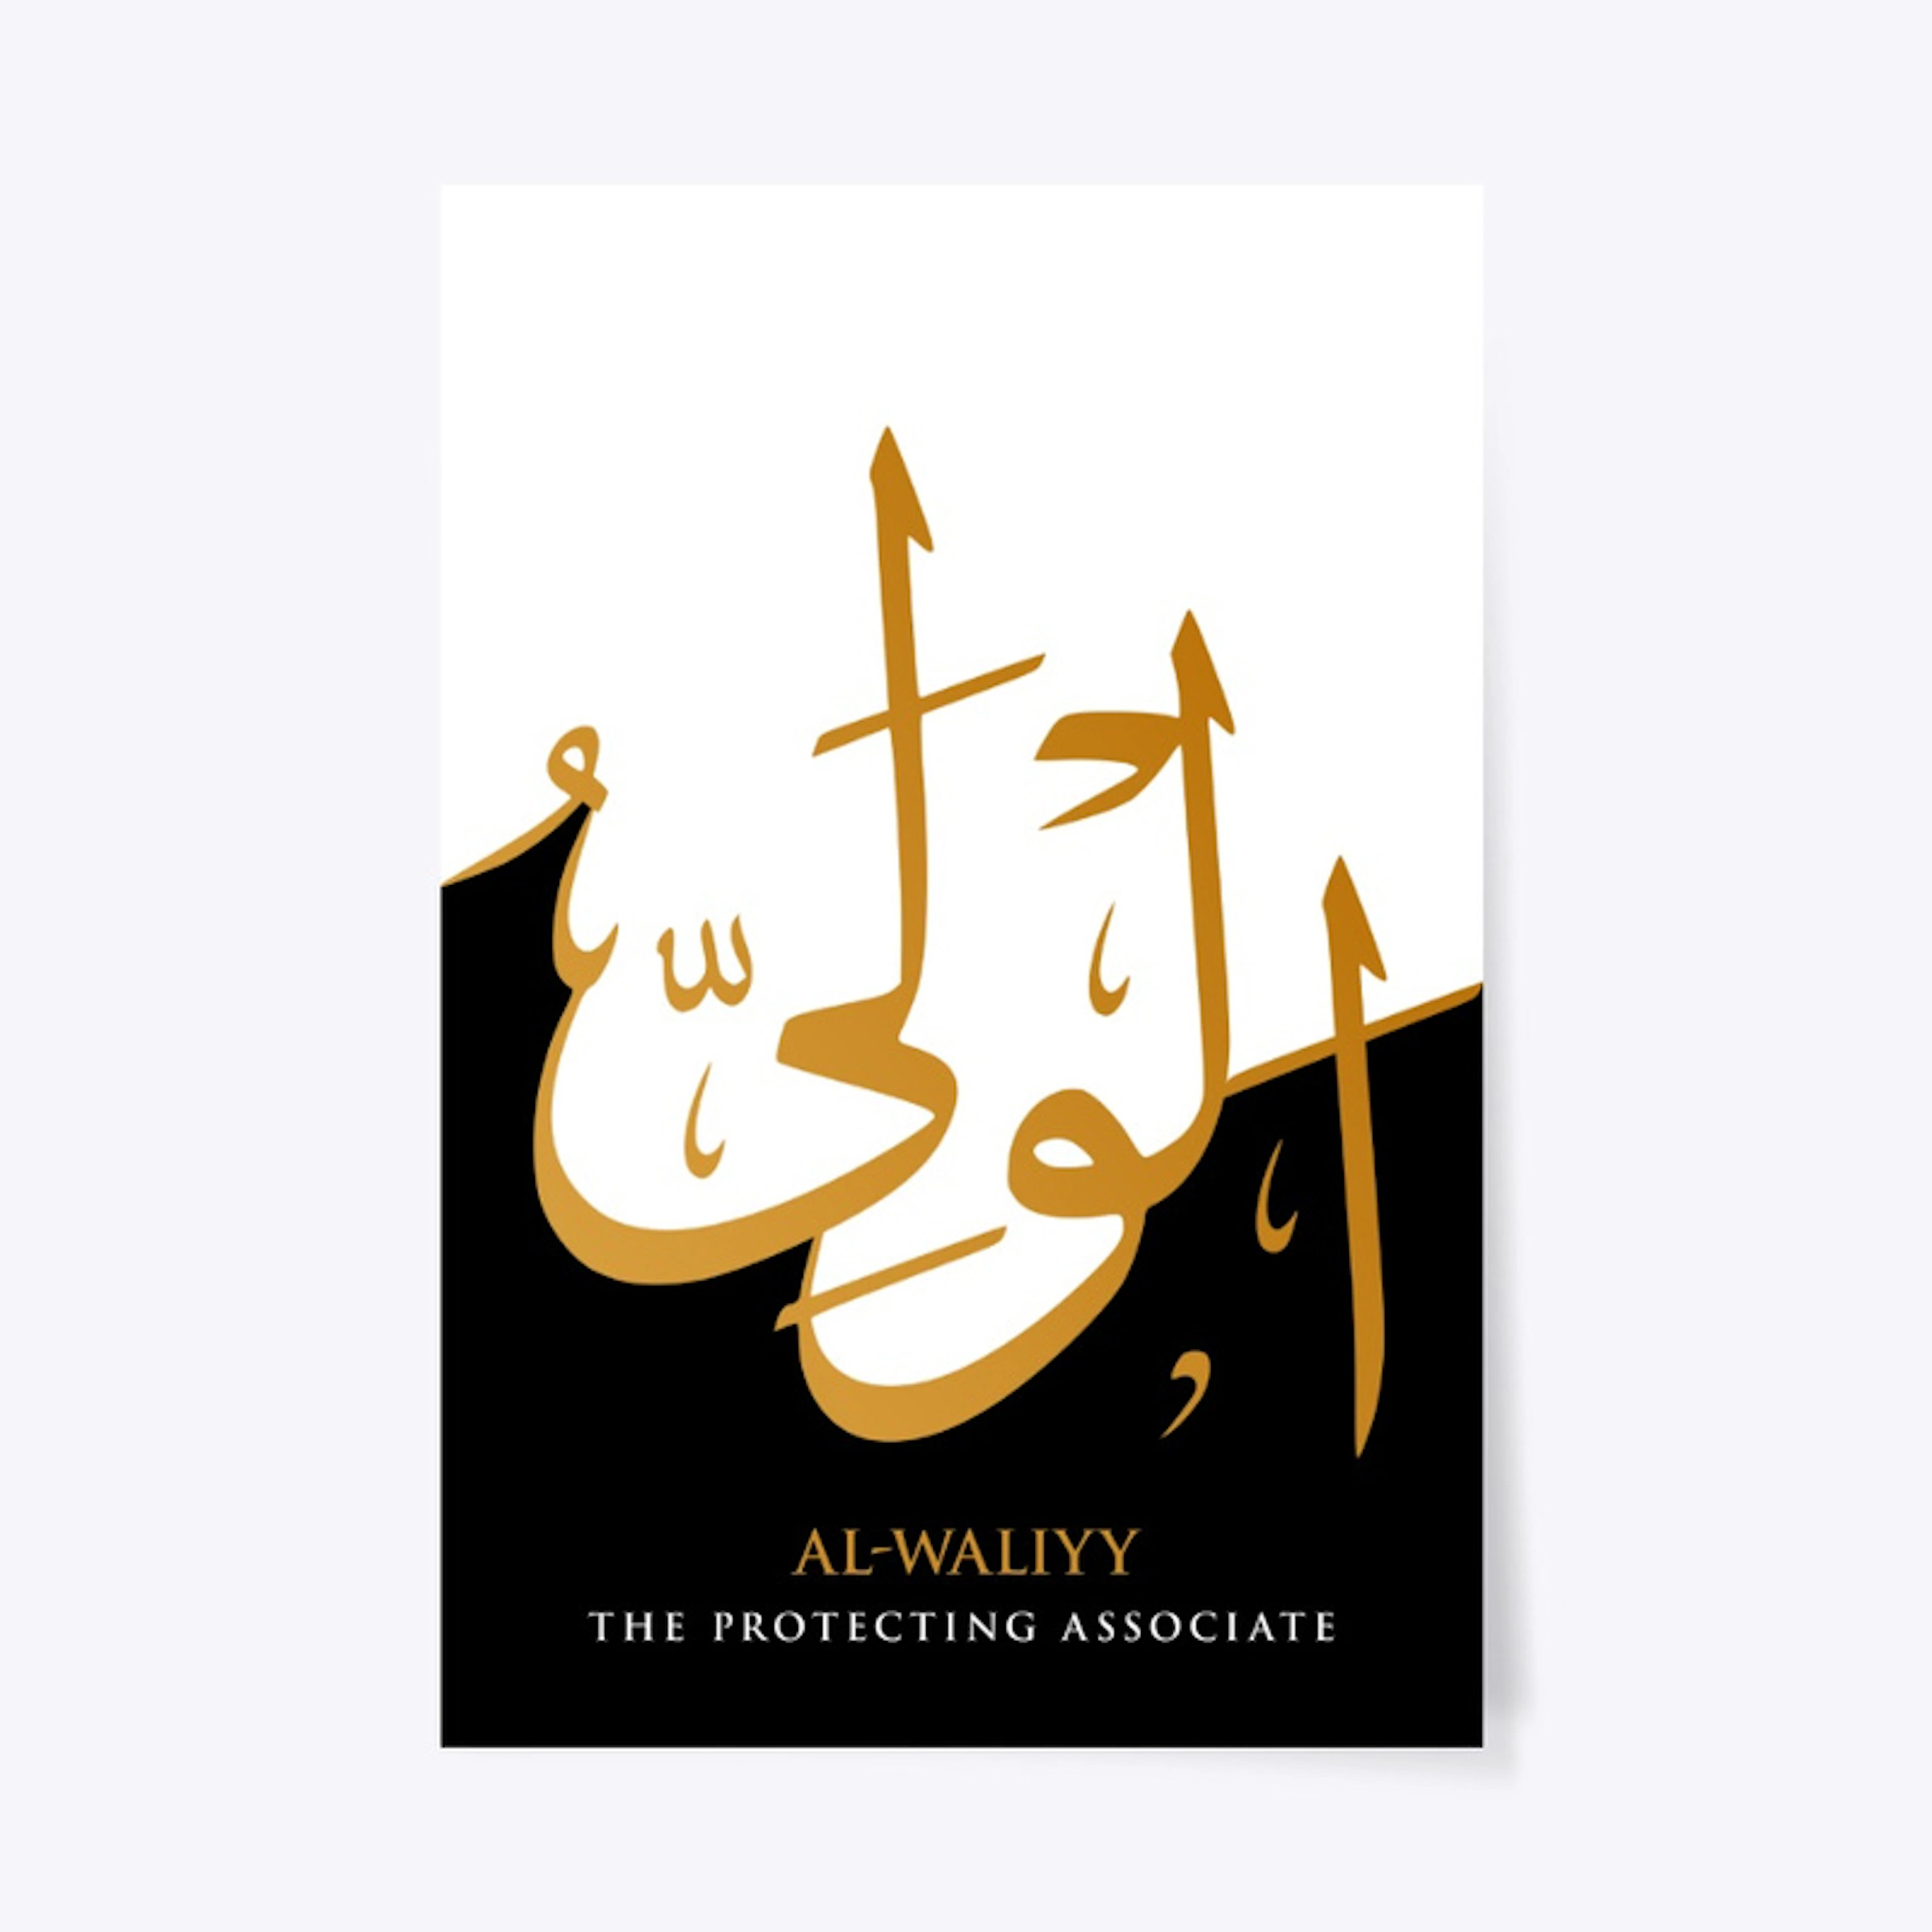 AL-WALIYY : THE PROTECTING ASSOCIATE